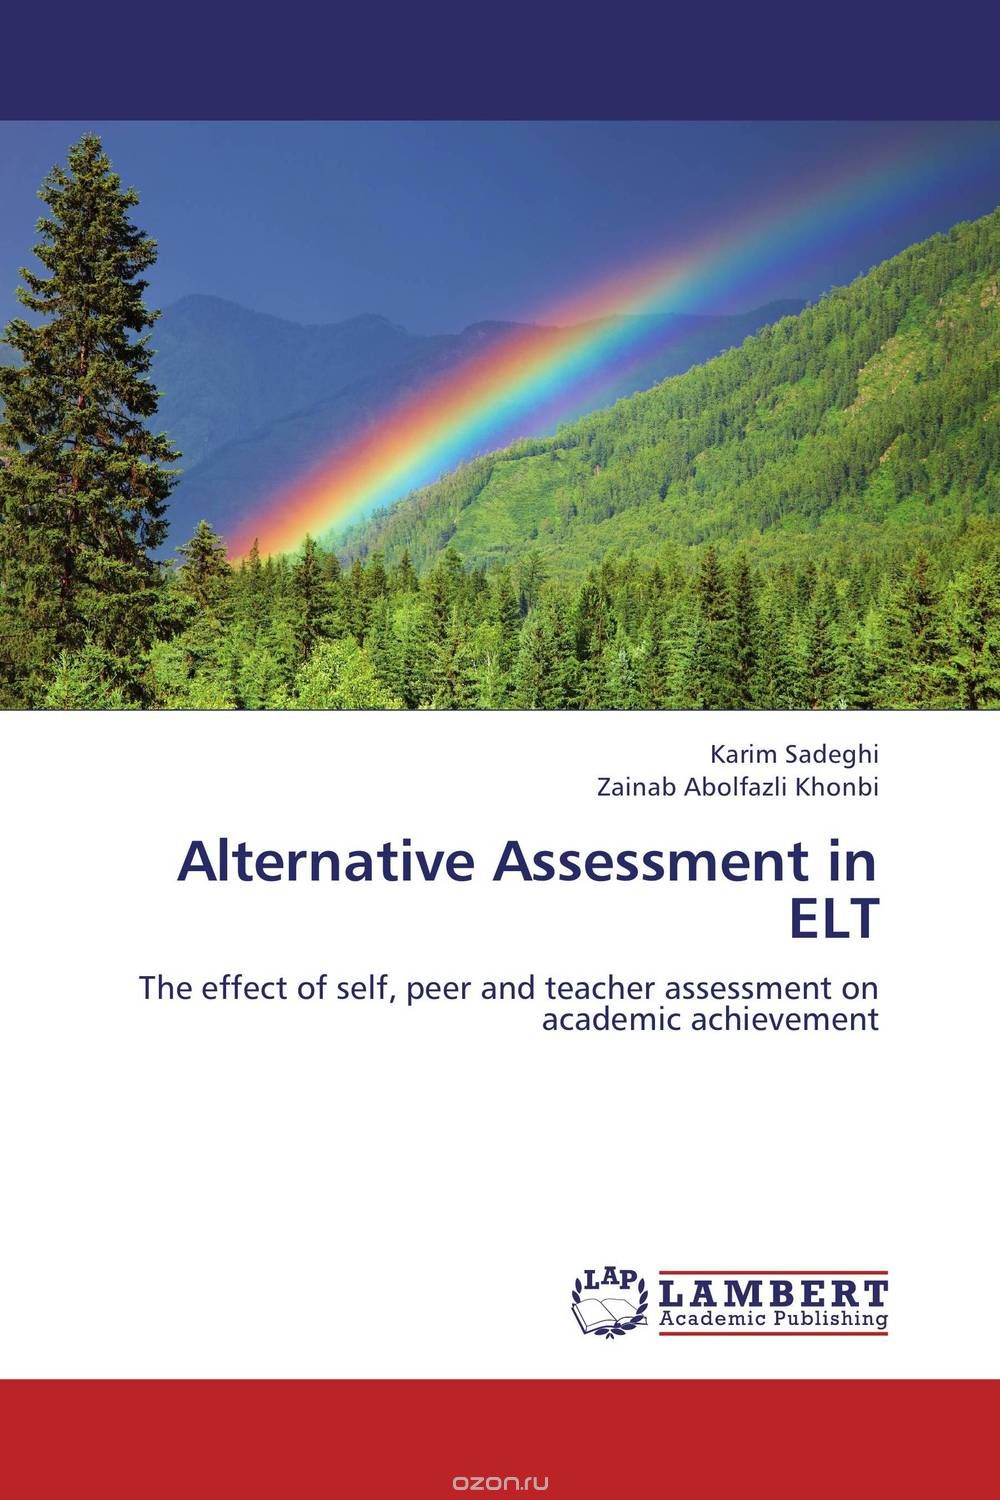 Скачать книгу "Alternative Assessment in ELT"